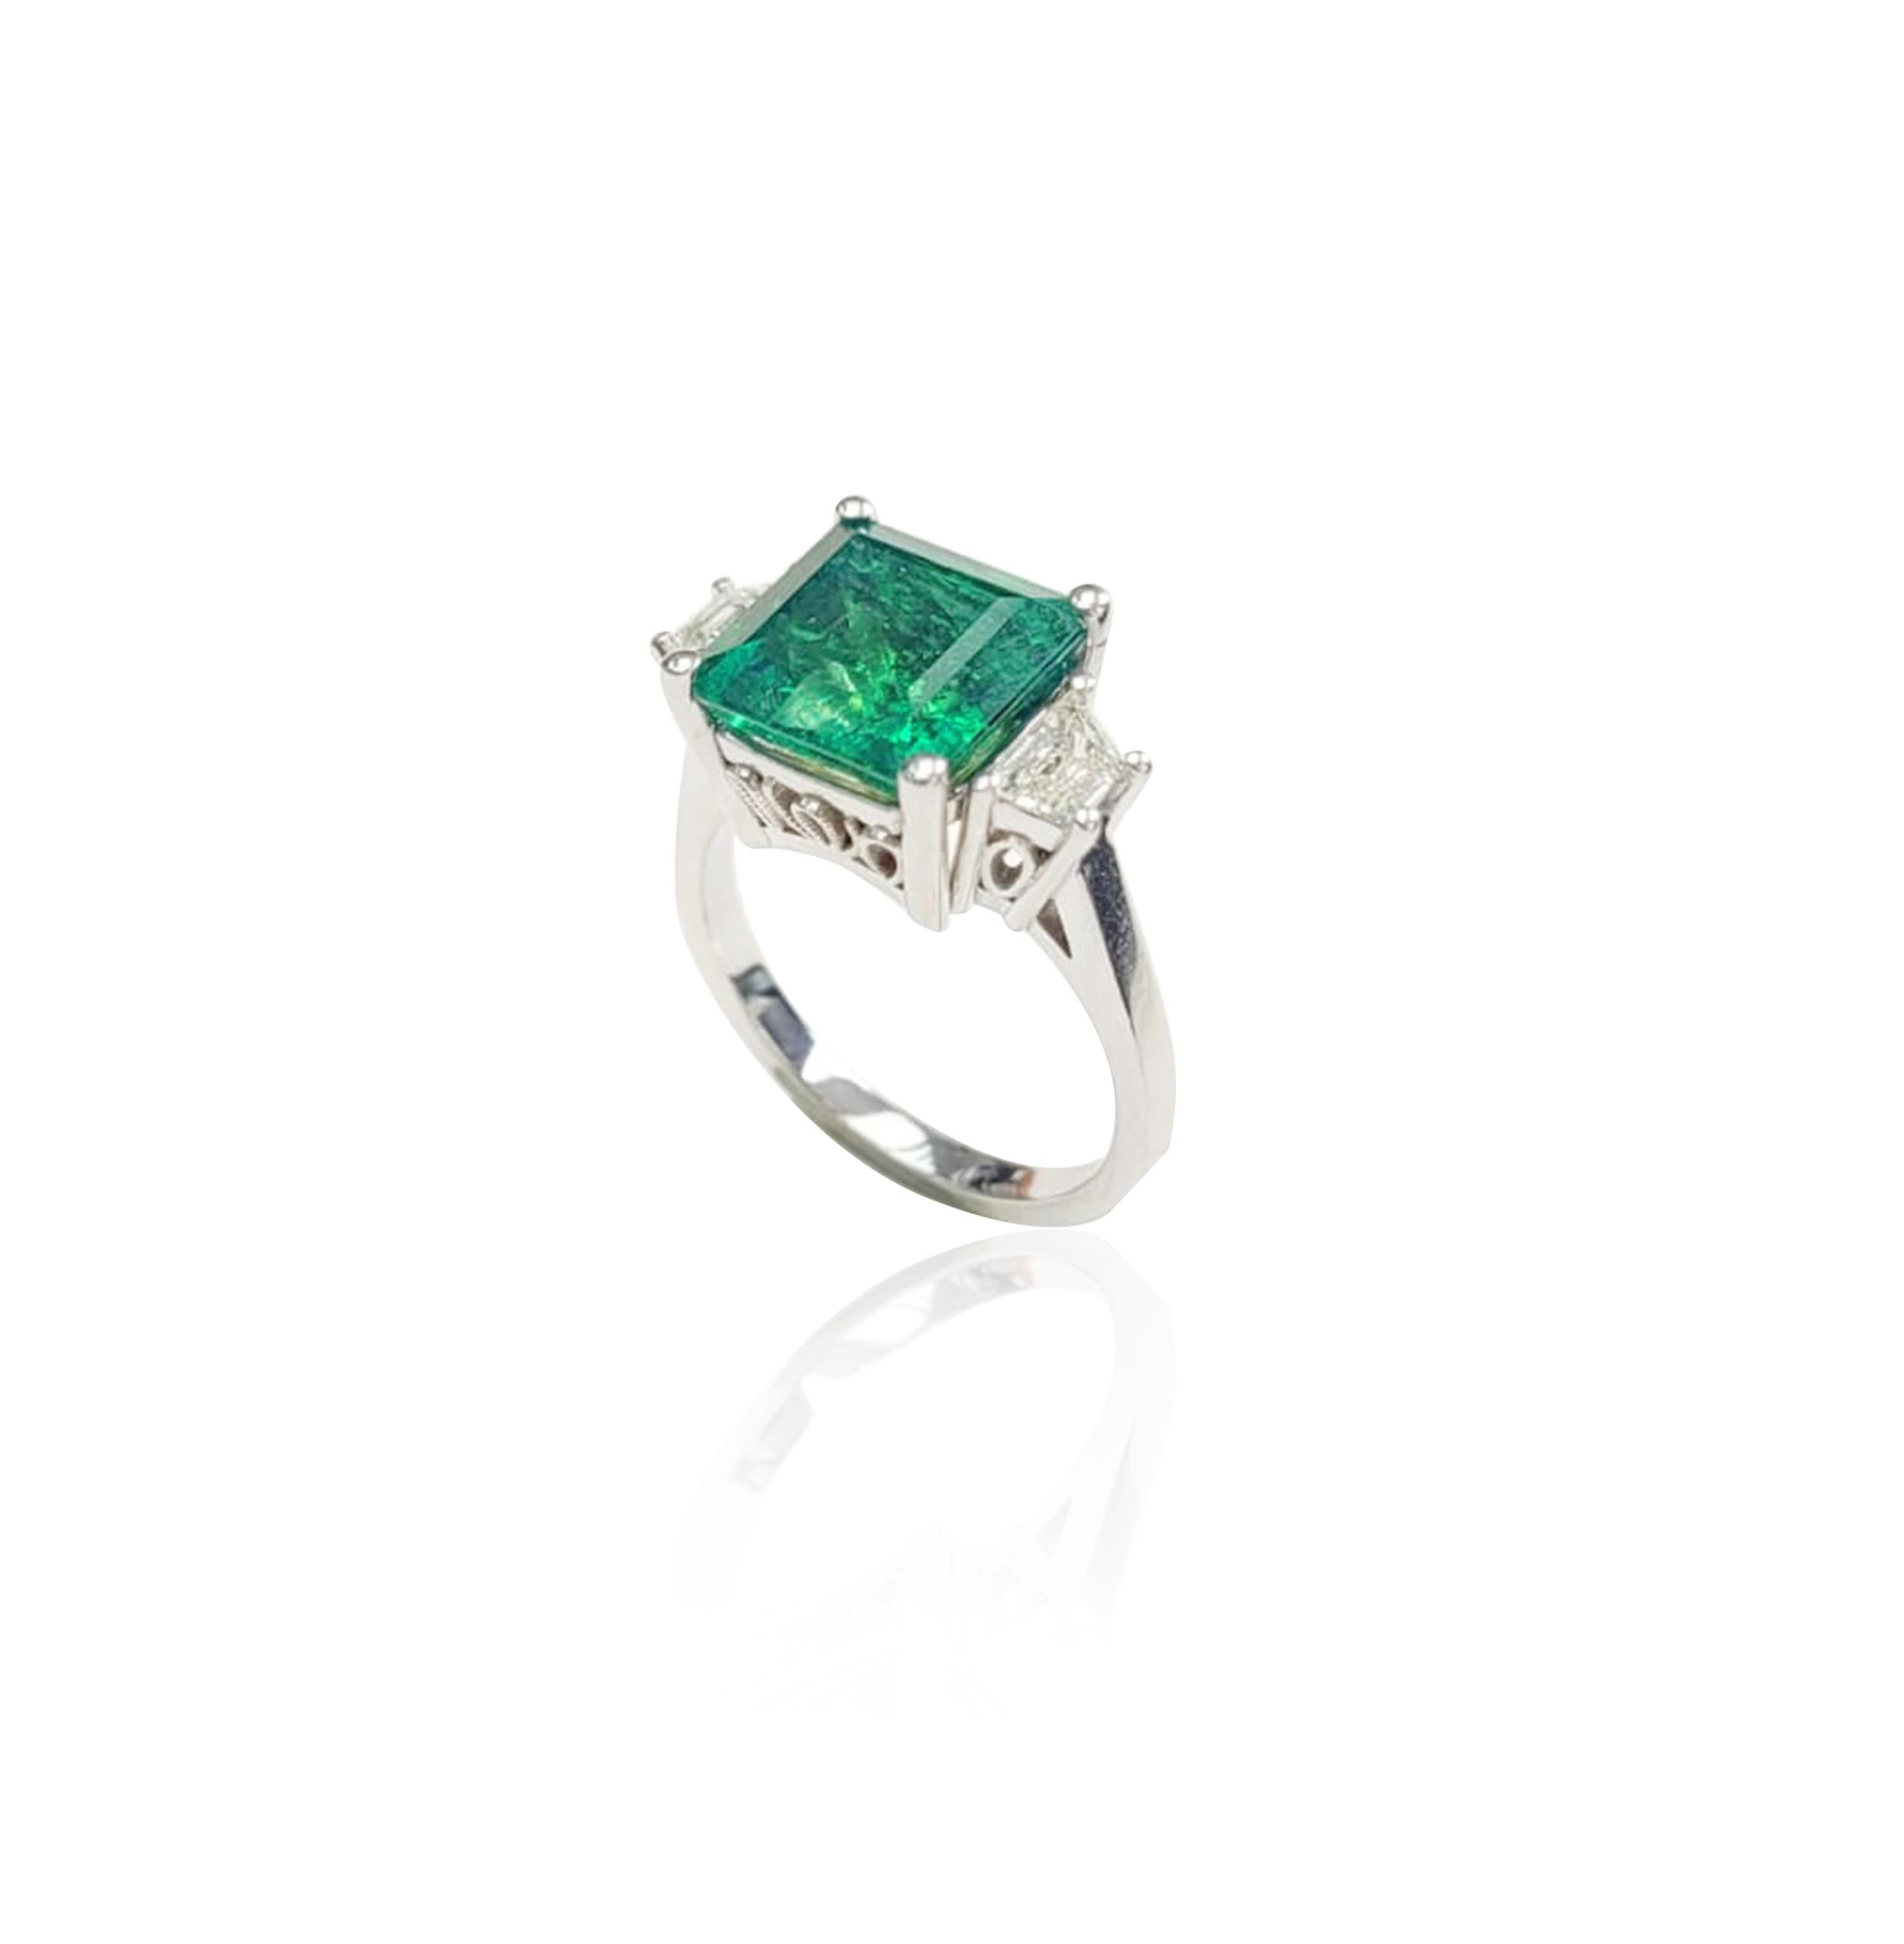 Trapezoid Diamonds - 0.48ct
Emerald Cut Emerald - 3.89ct & 9.65mm
Ring Metal - 18k White Gold

Tag #17766
